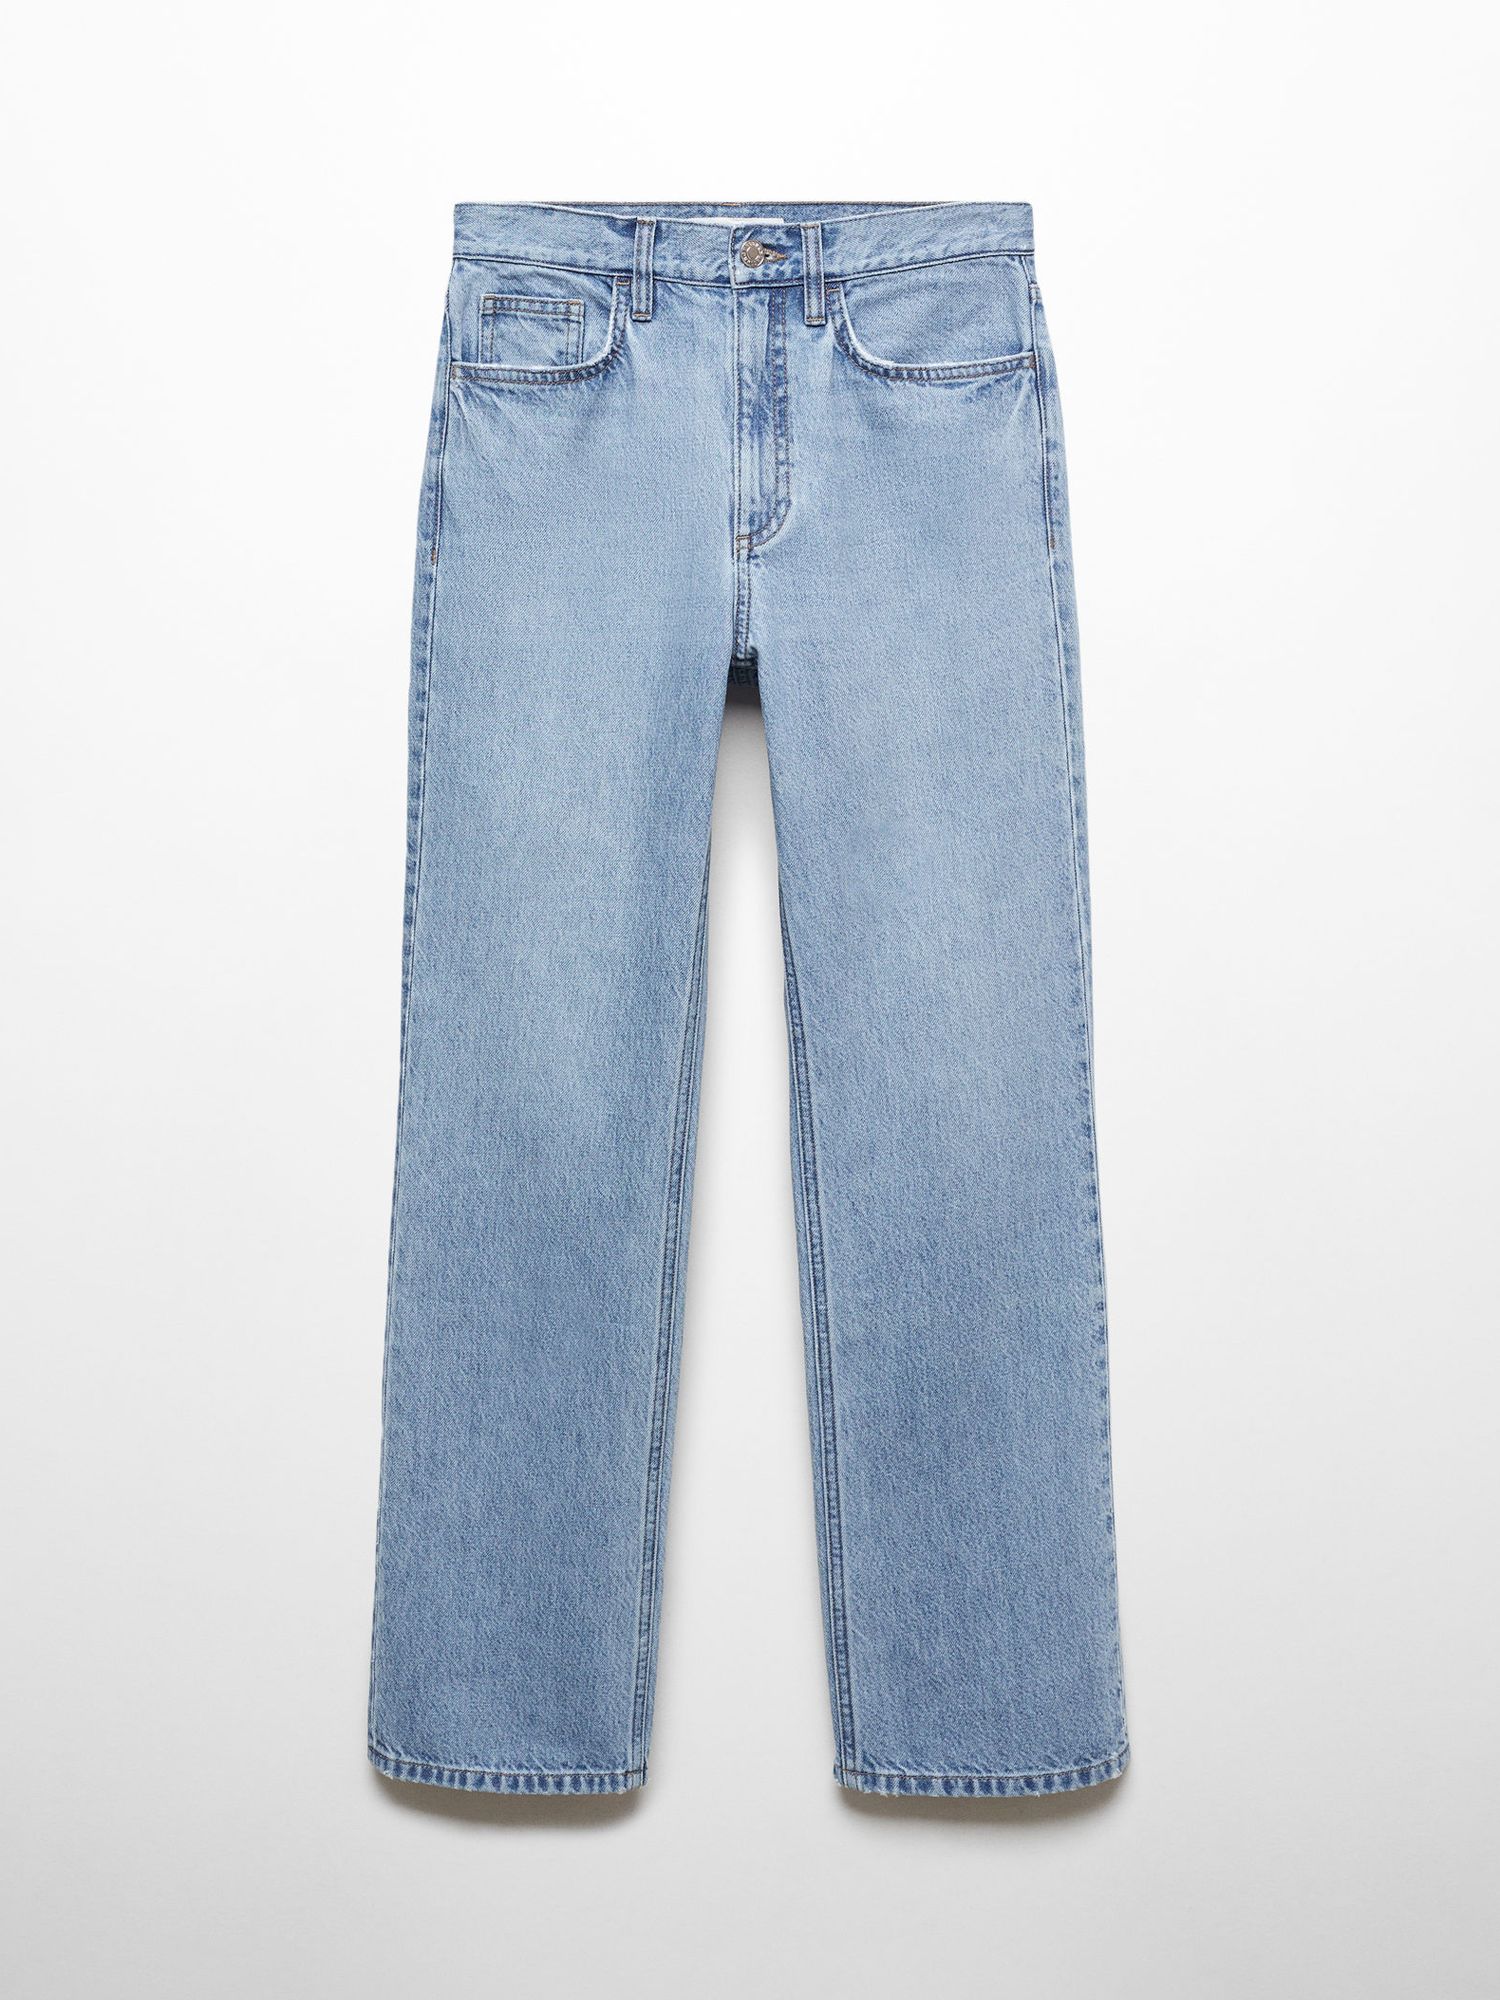 Mango Matilda Cotton Straight Leg Jeans, Open Blue, 18